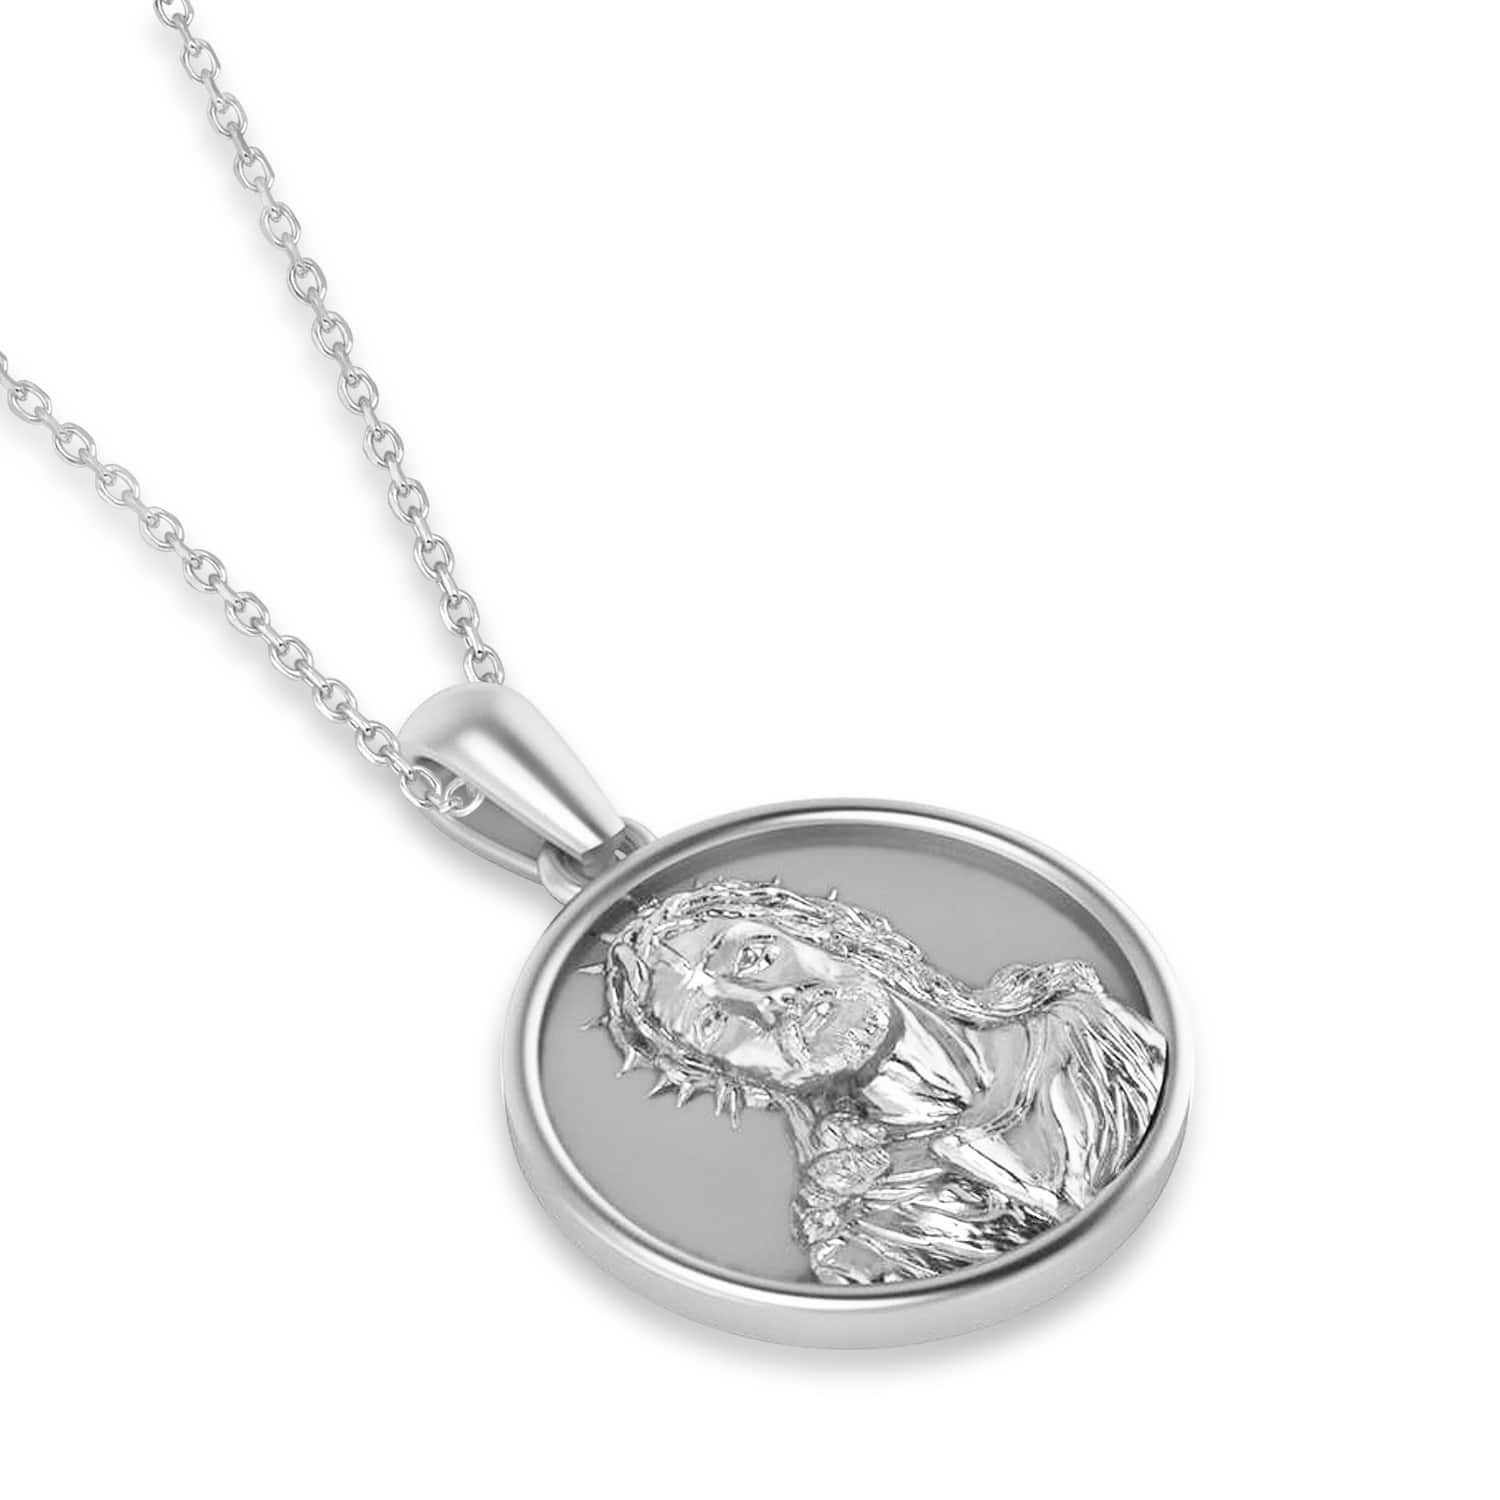 Jesus Christ Medal Pendant Necklace 14k White Gold